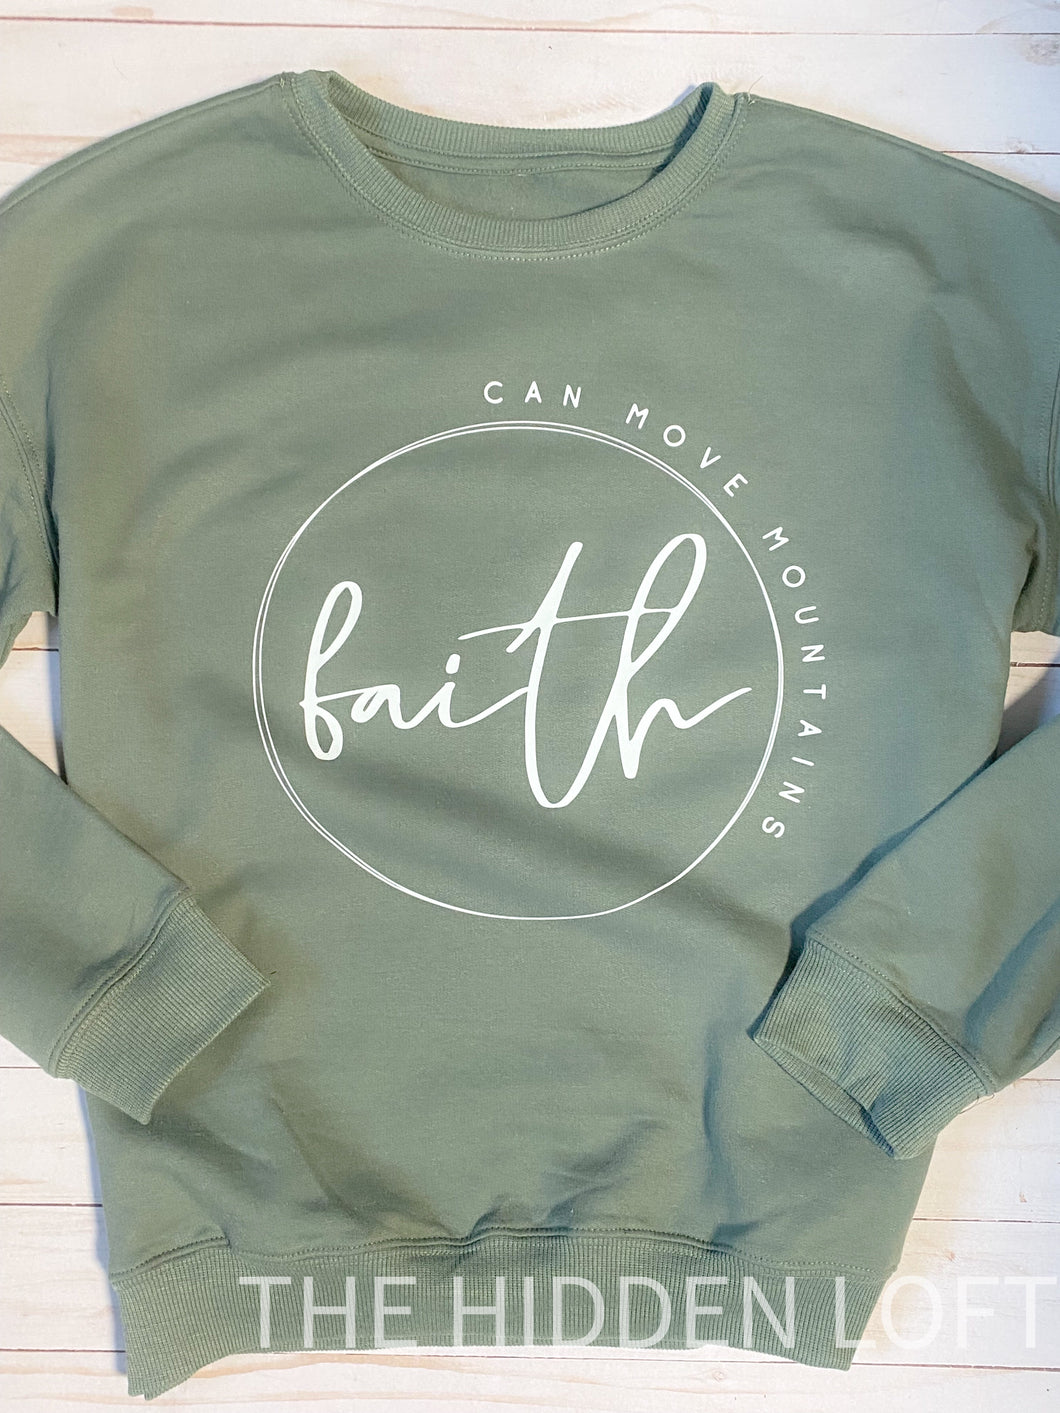 Faith Can Move Moutains Sweatshirt